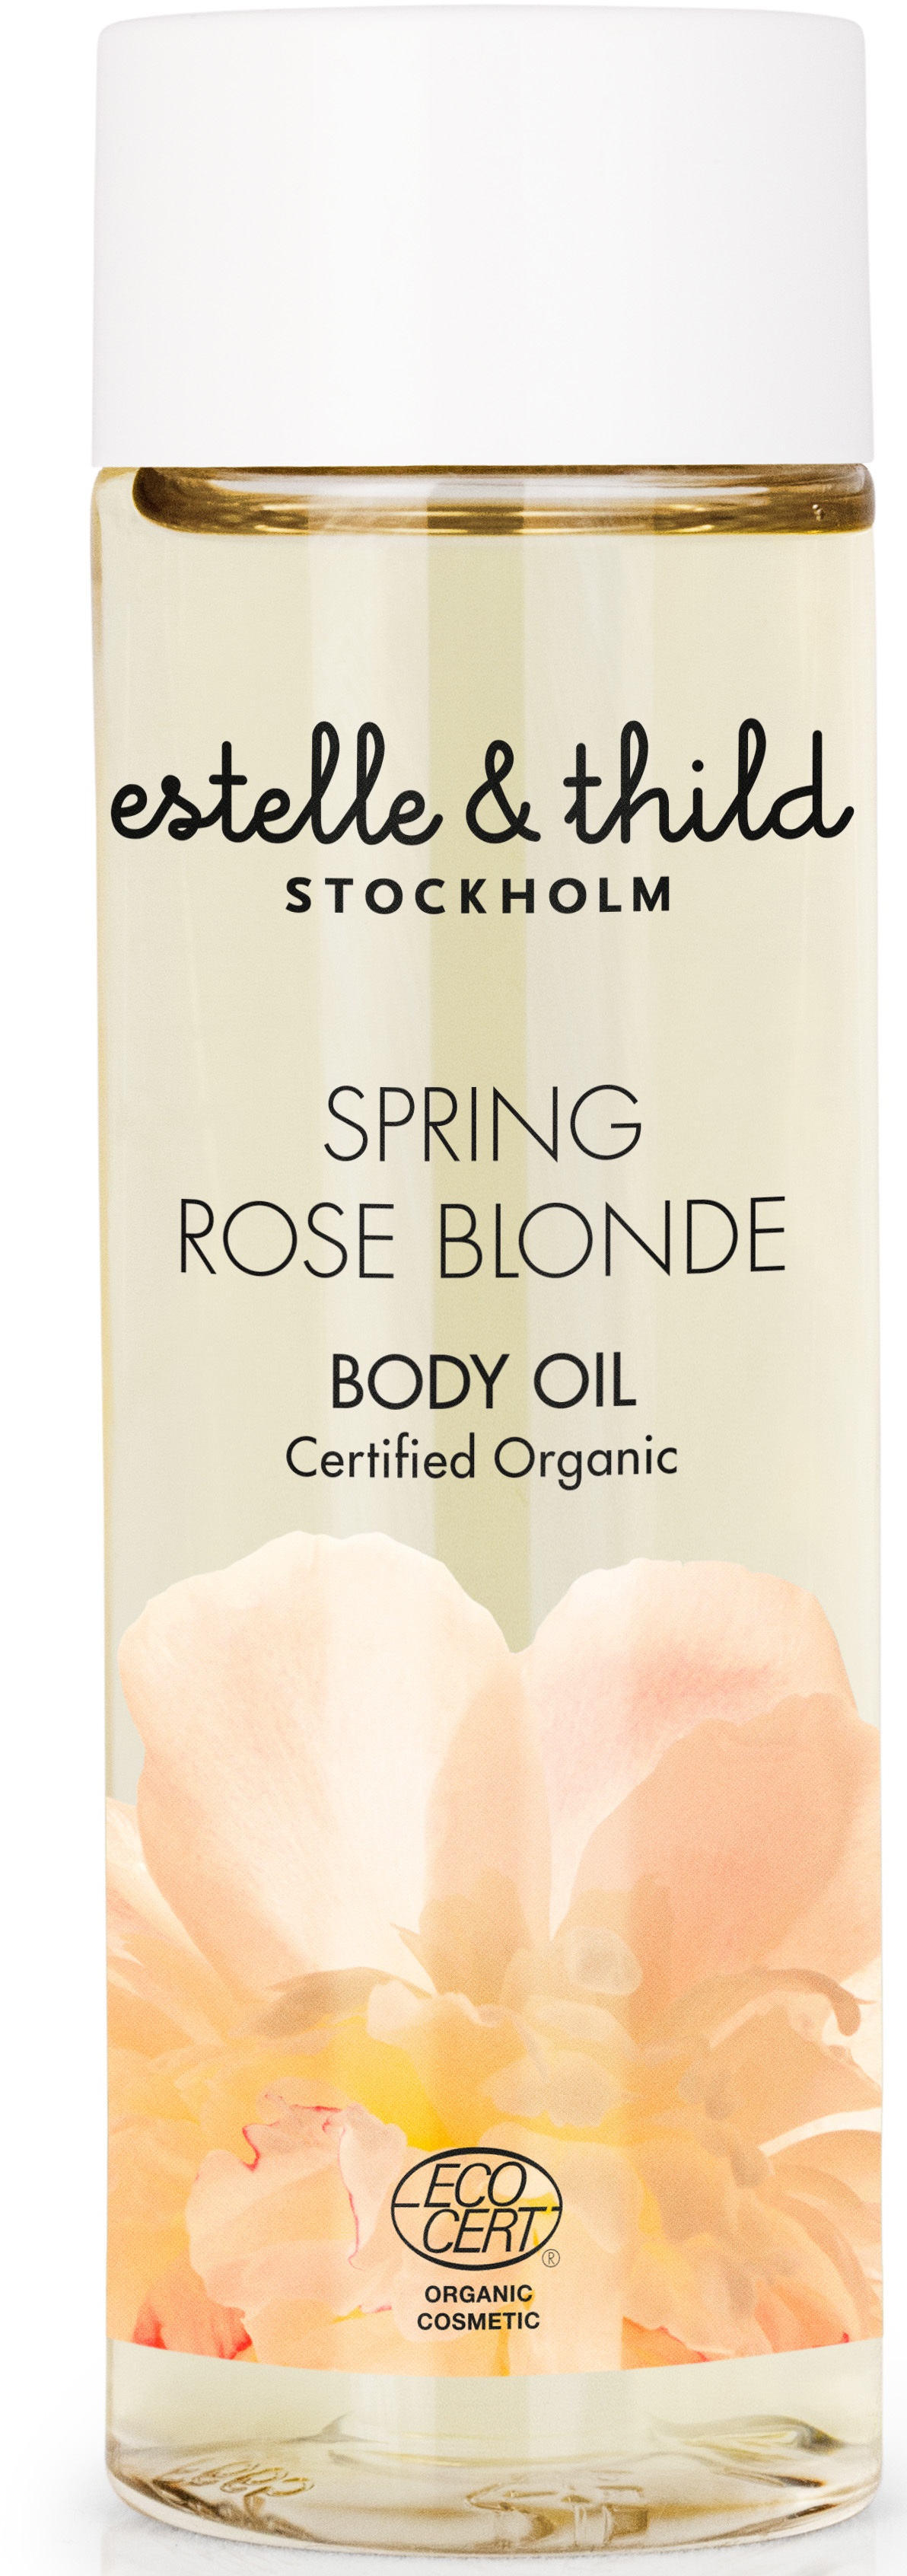 Estelle & Thild Spring Rose Blonde Body Oil